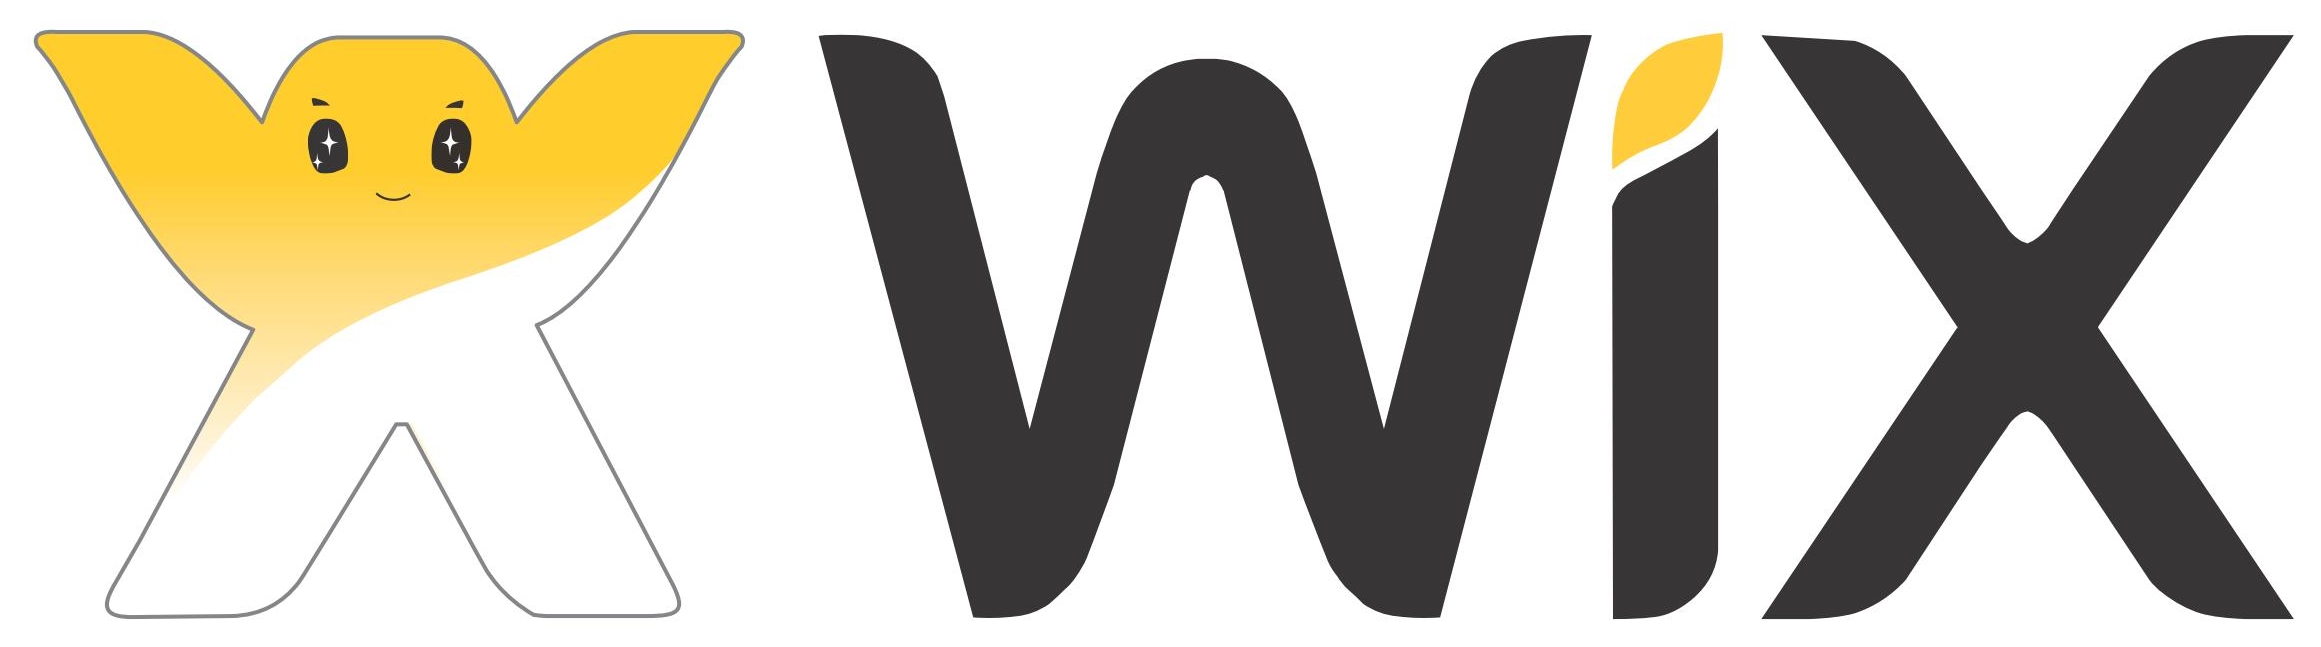 wix-logo.jpg